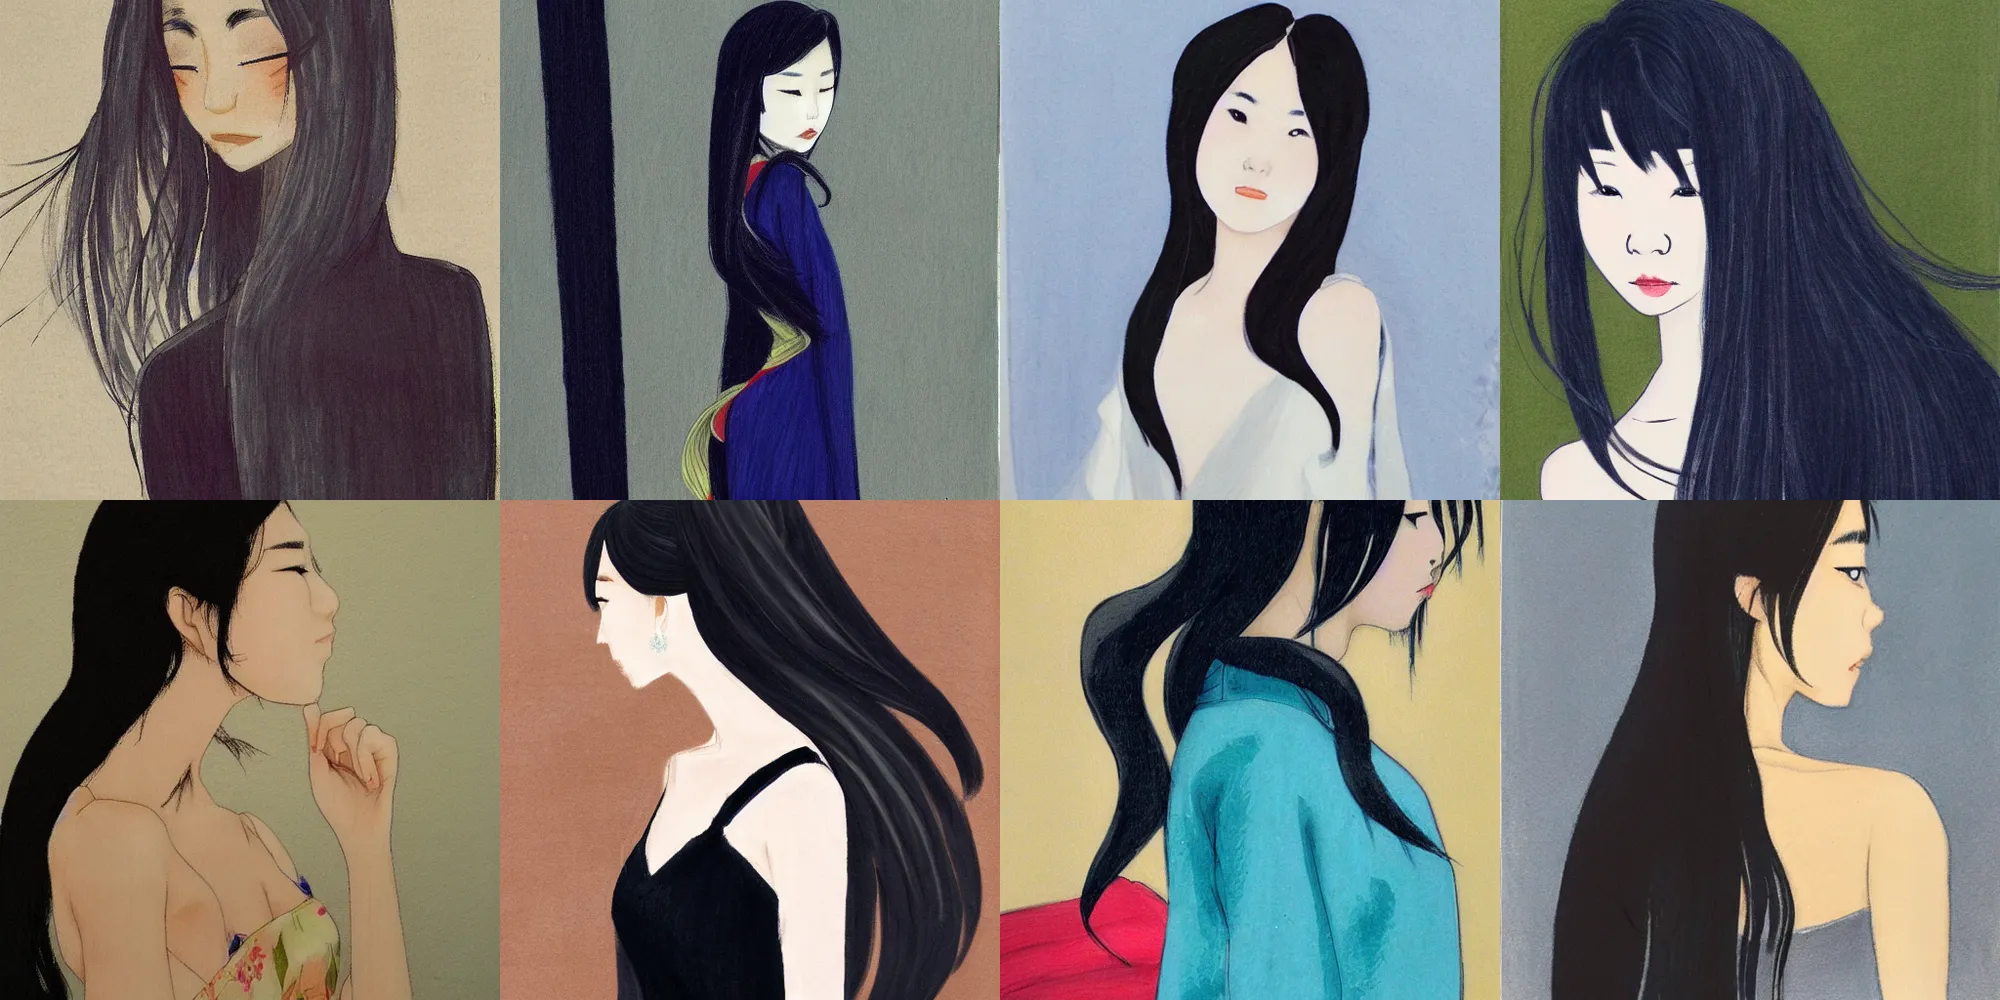 Prompt: asian girl with long hair, profile, silk dress, by izumi kogahara